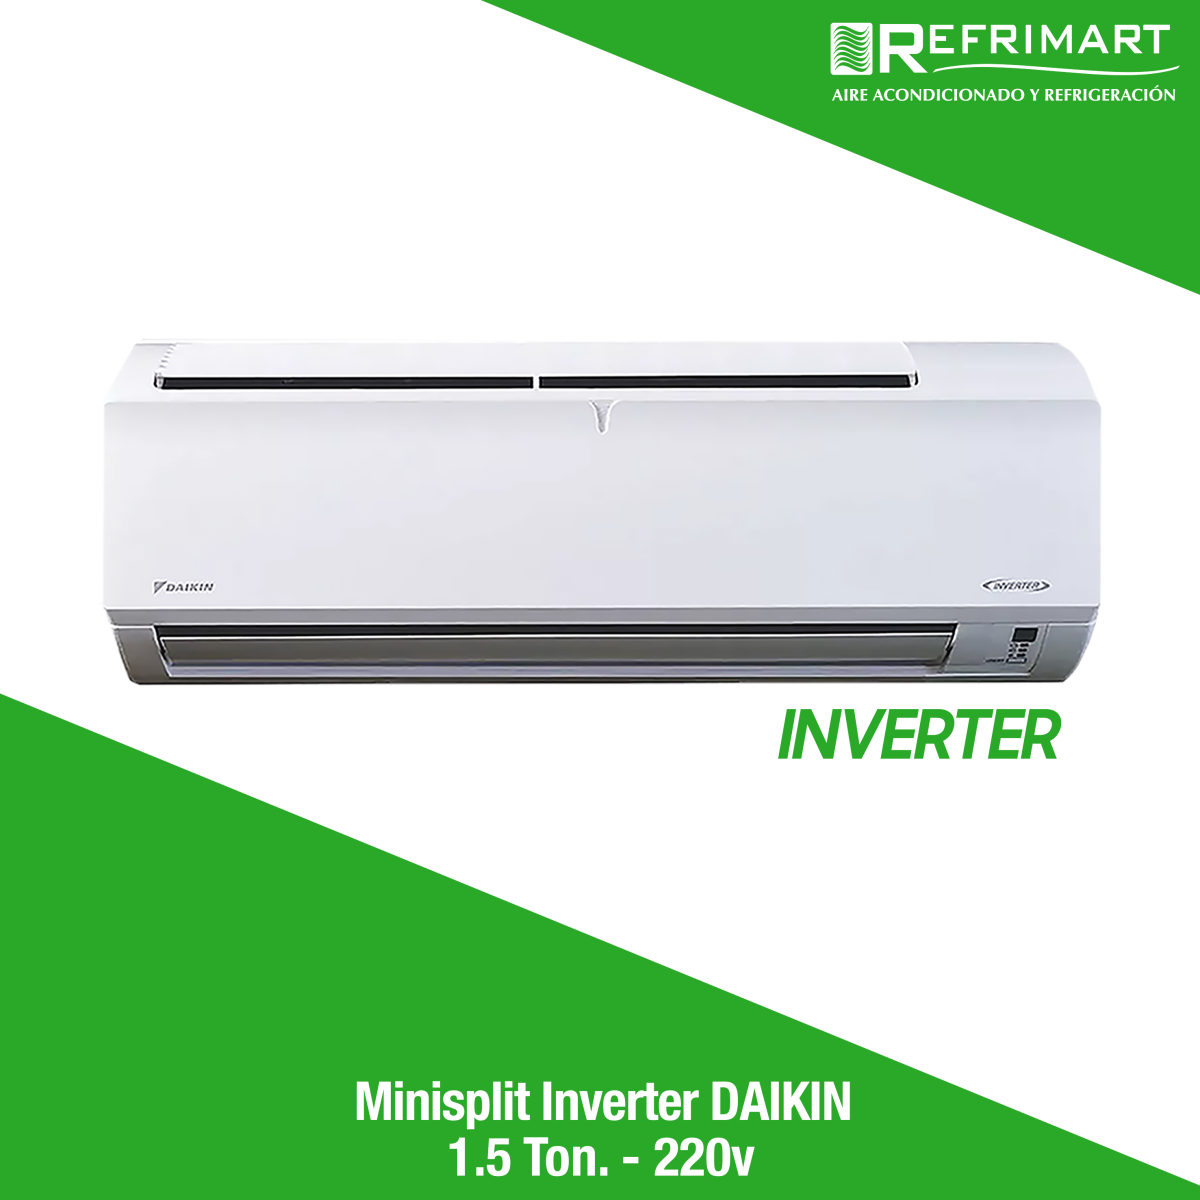 Minisplit Inverter DAIKIN - 1.5 Ton. 220v